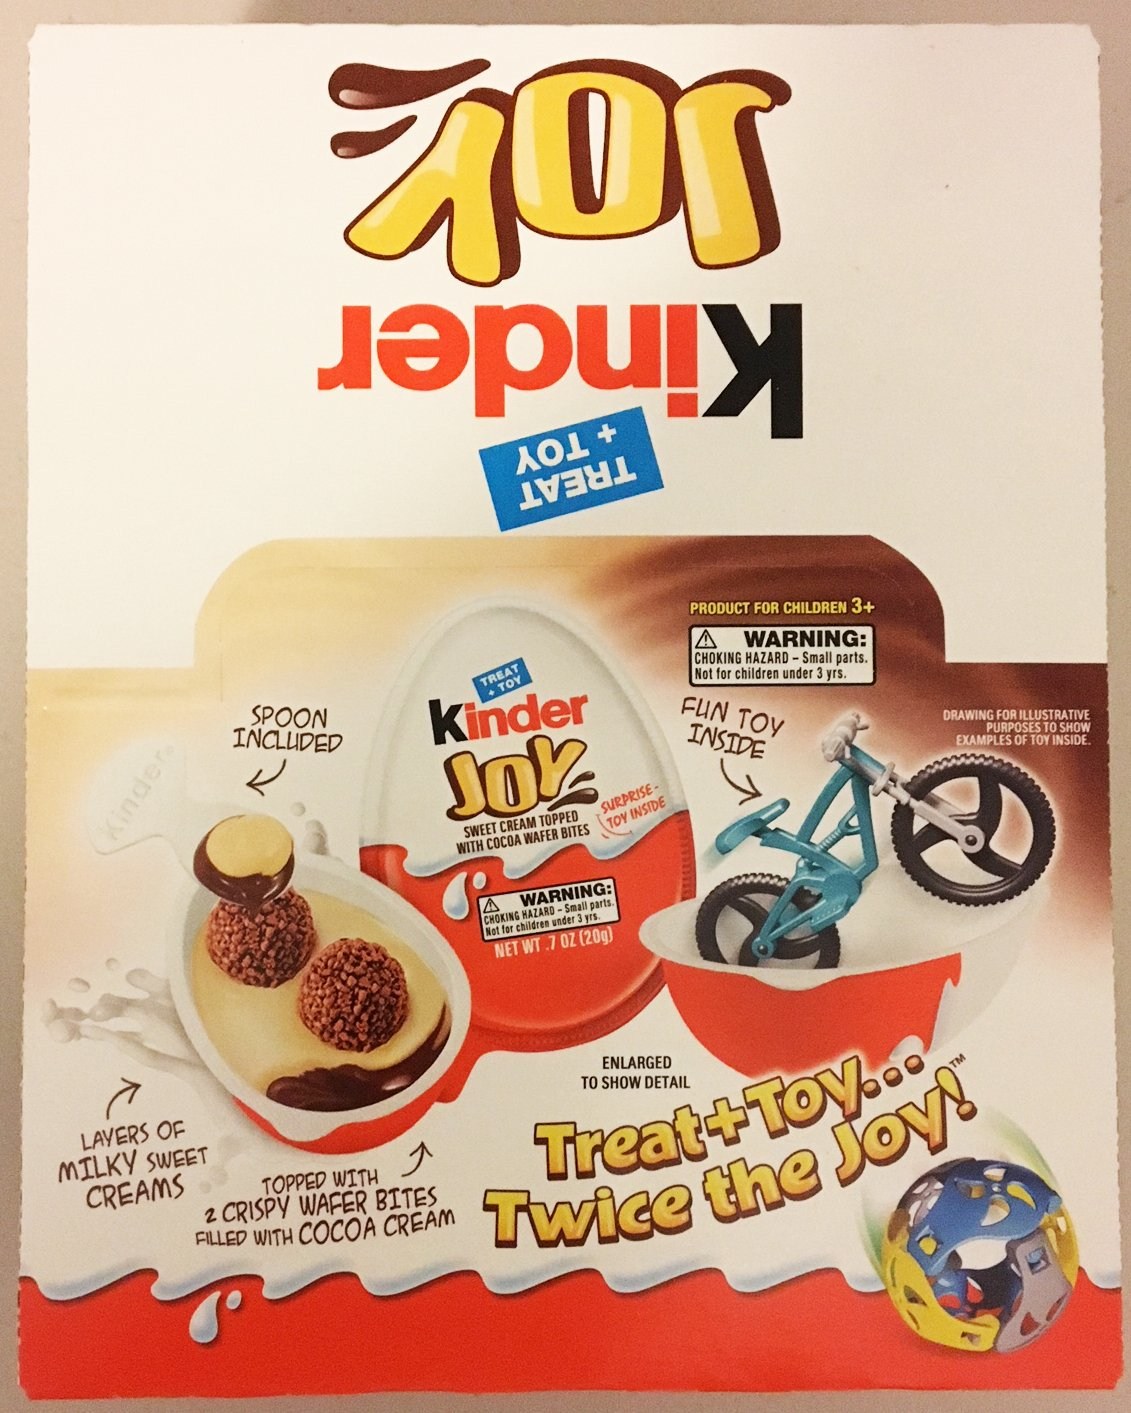 Kinder Joy Chocolate Surprise Egg With Toy Inside, 12 Eggs (8.4Oz Total innen Kinder Joy Image,